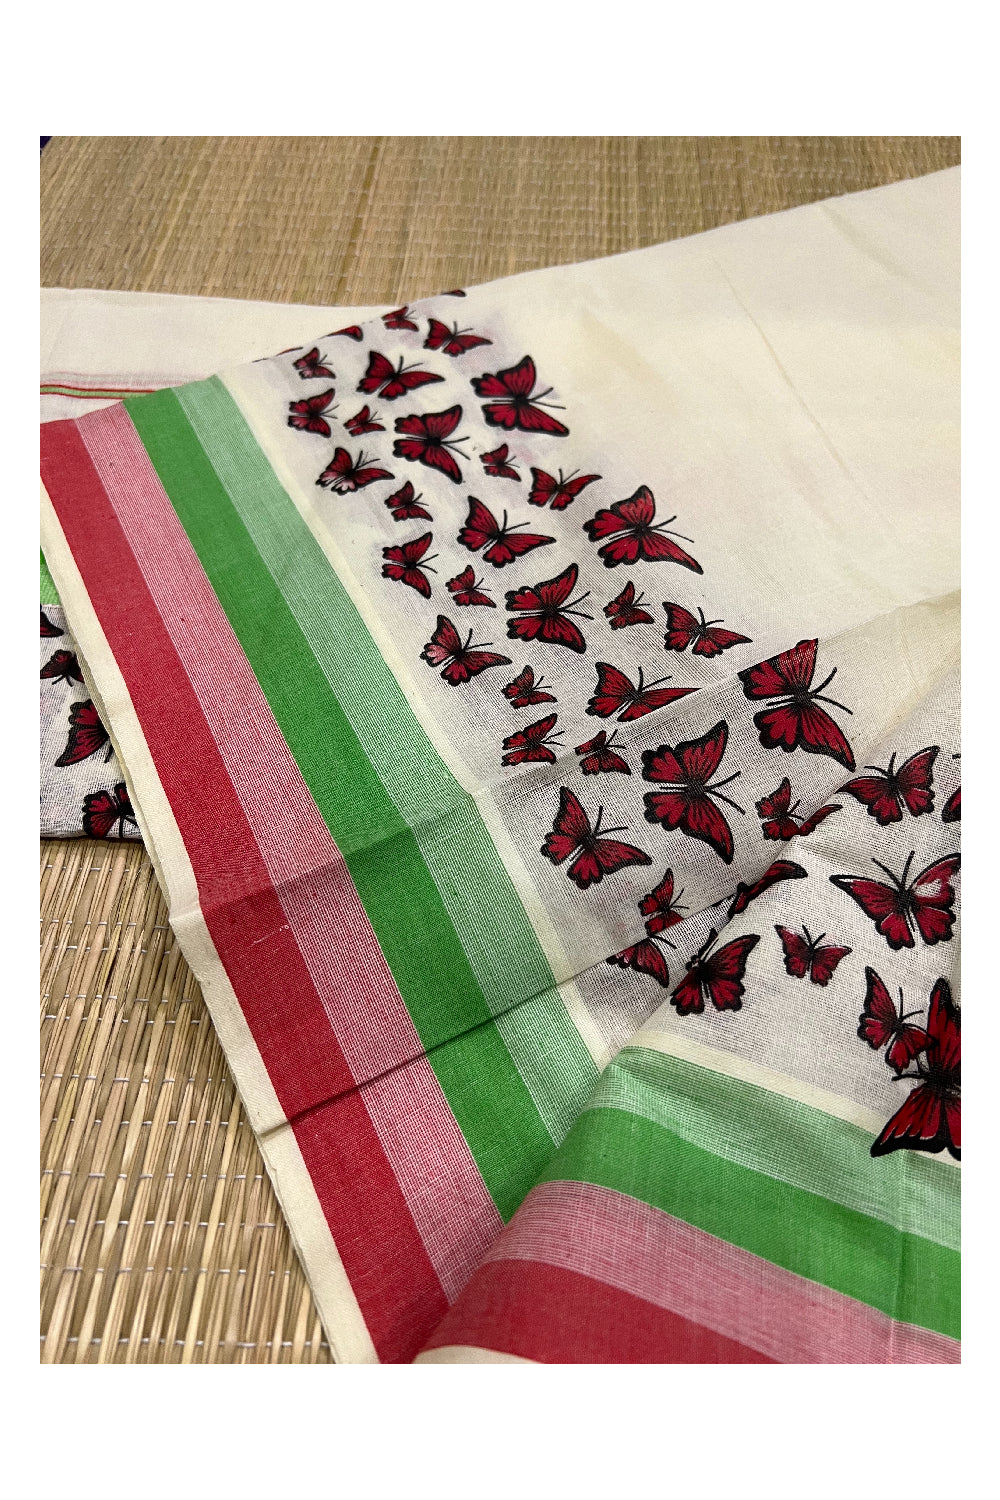 Kerala Cotton Set Mundu (Mundum Neriyathum) with Light Green Red Butterfly Block Prints on Border